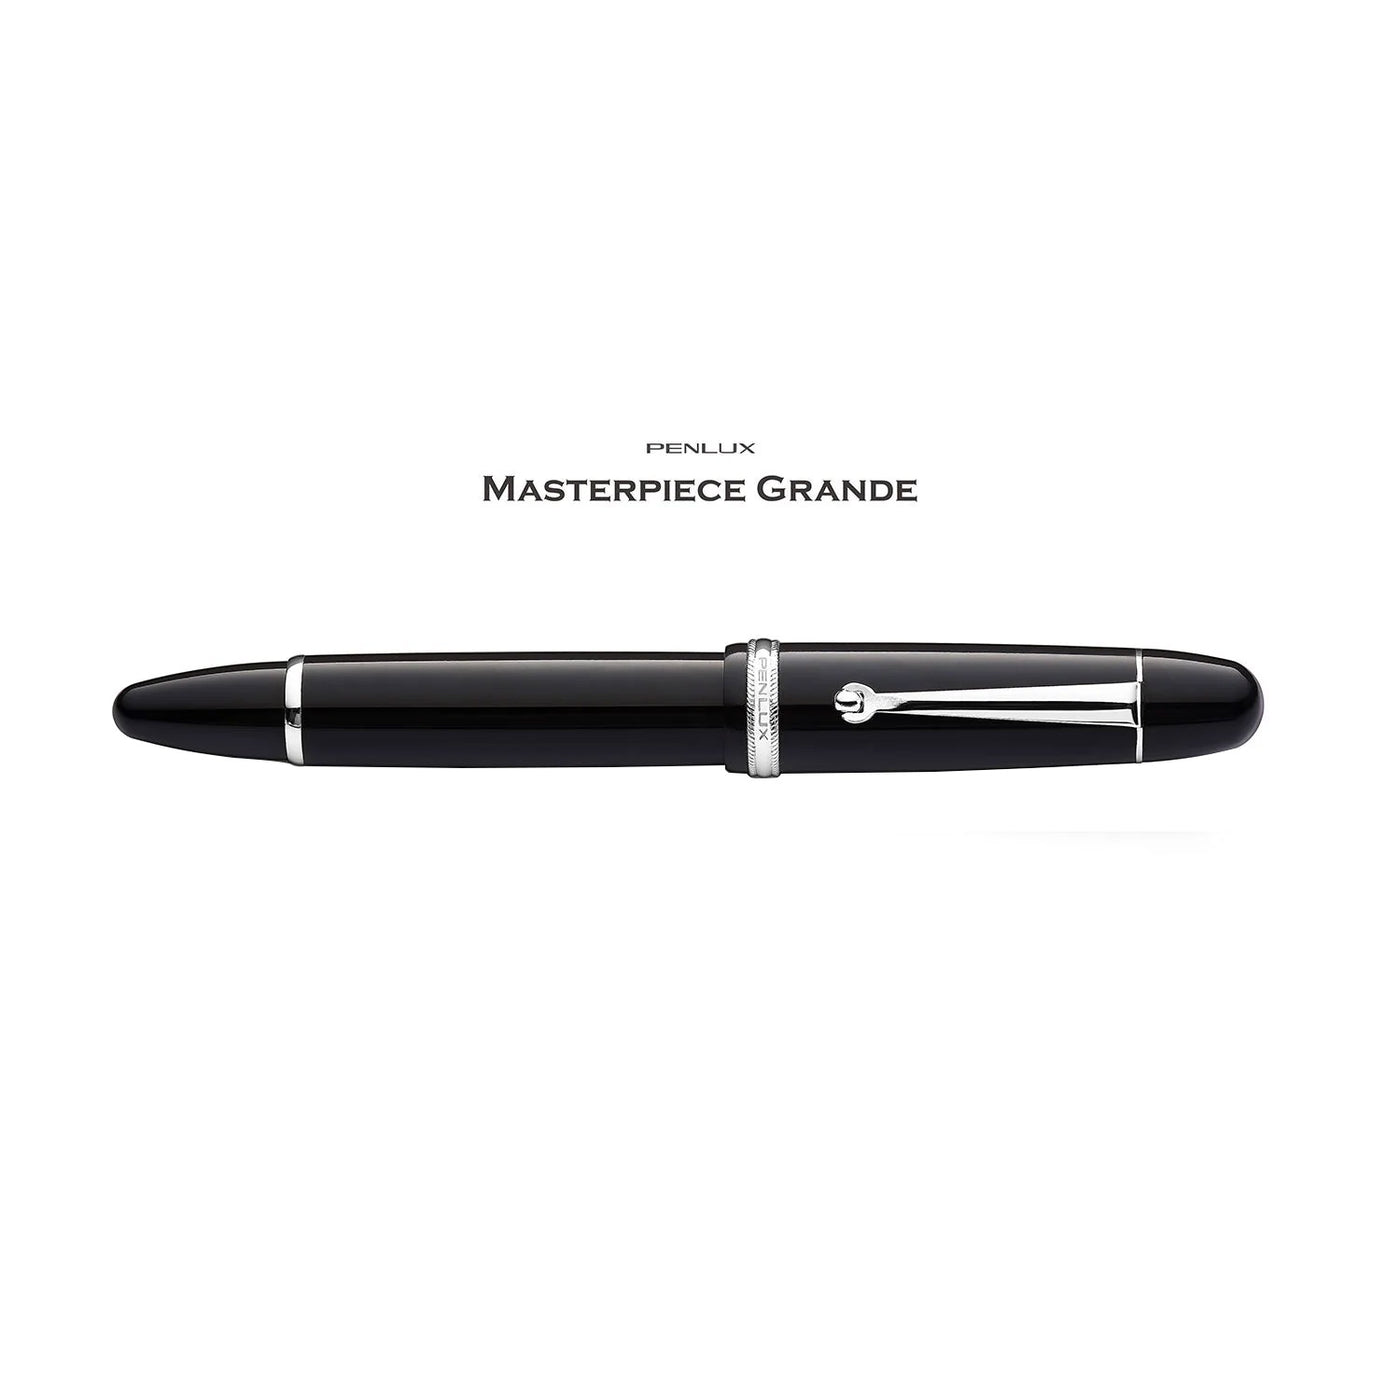 Penlux Masterpiece Grande Fountain Pen - Black 3